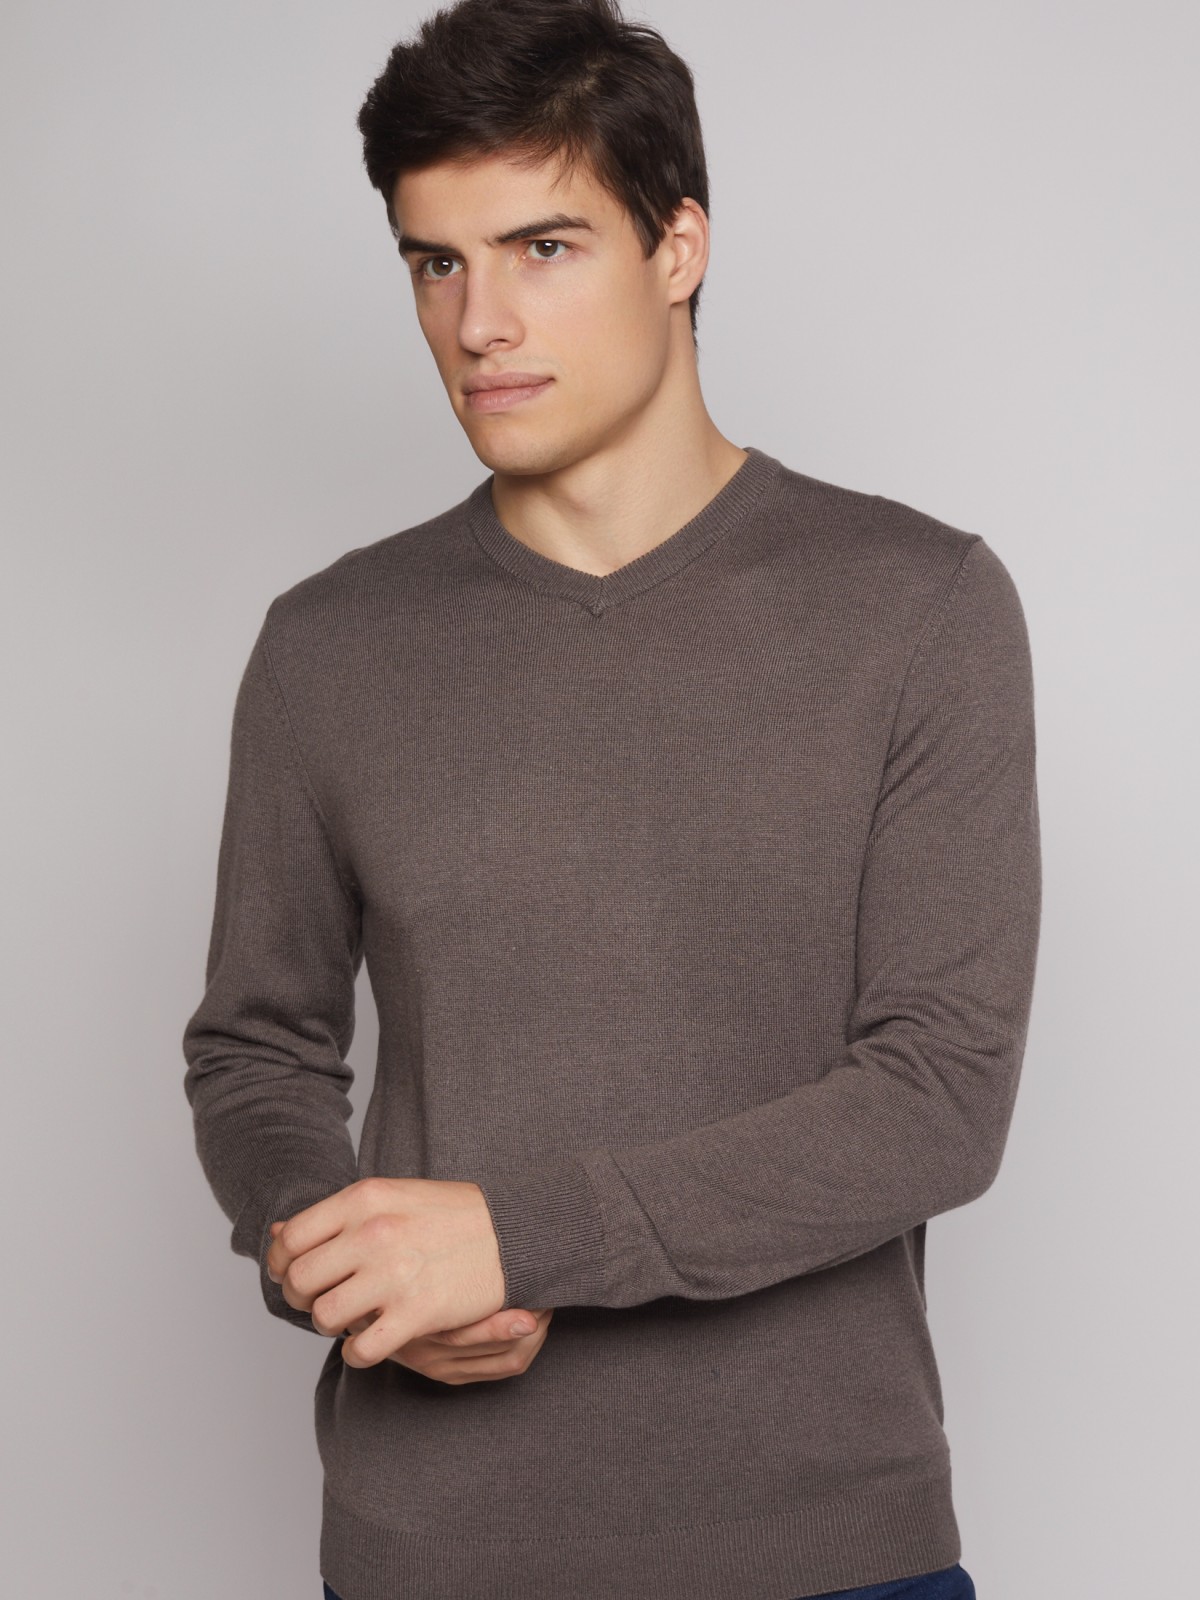 Тёплый трикотажный пуловер zolla 012426163052, цвет коричневый, размер M - фото 5